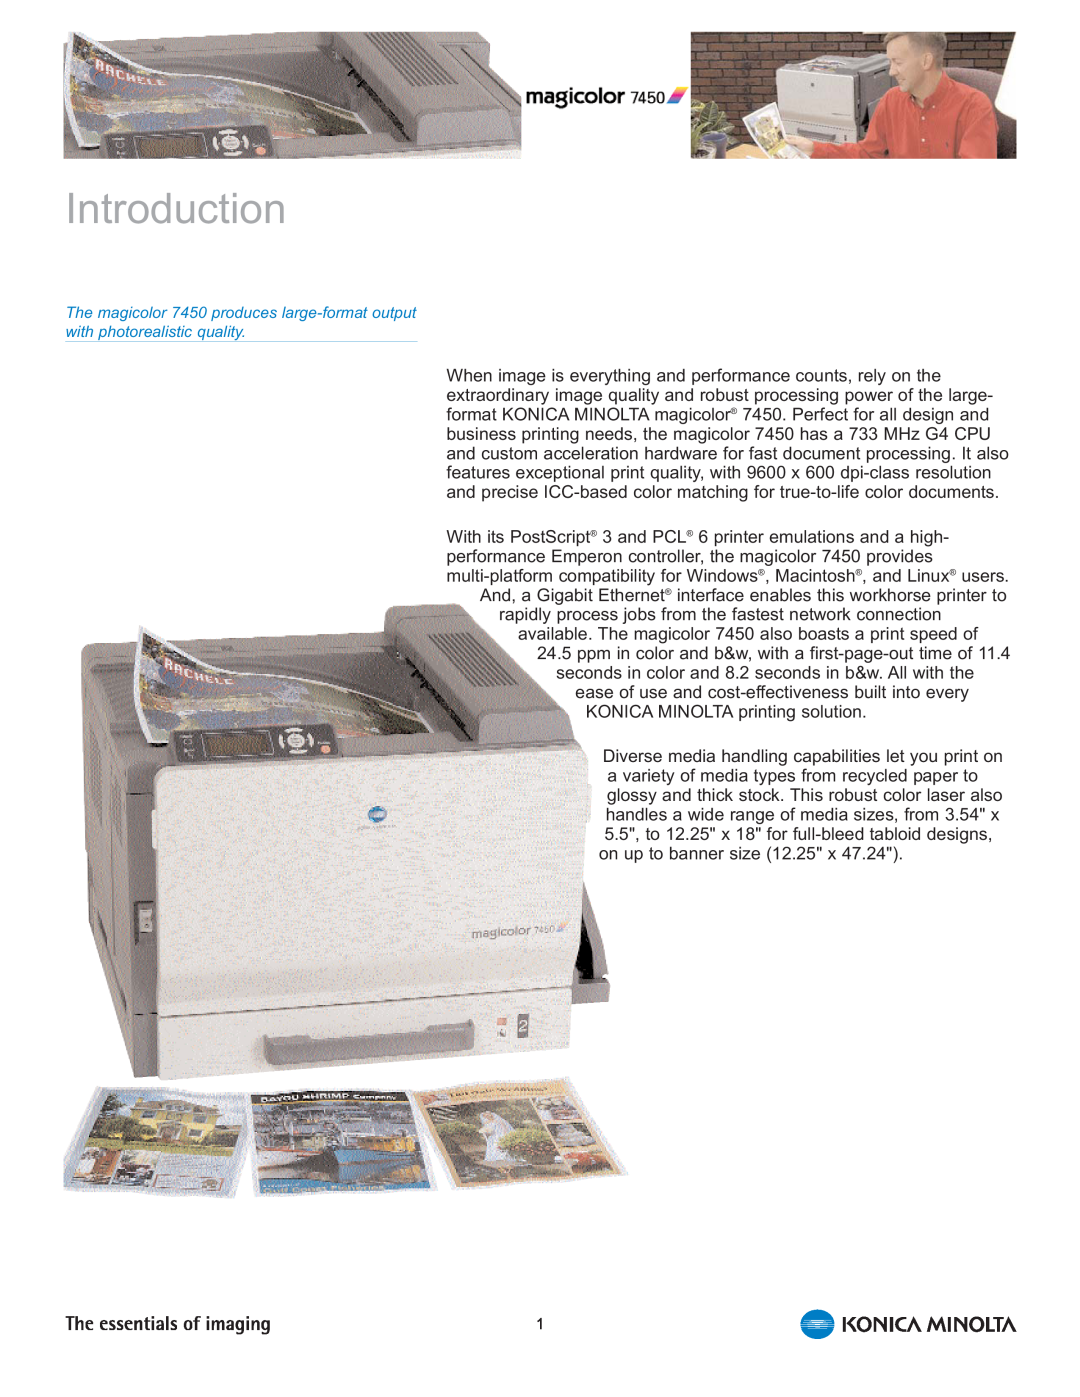 Konica Minolta 7450 manual Introduction 